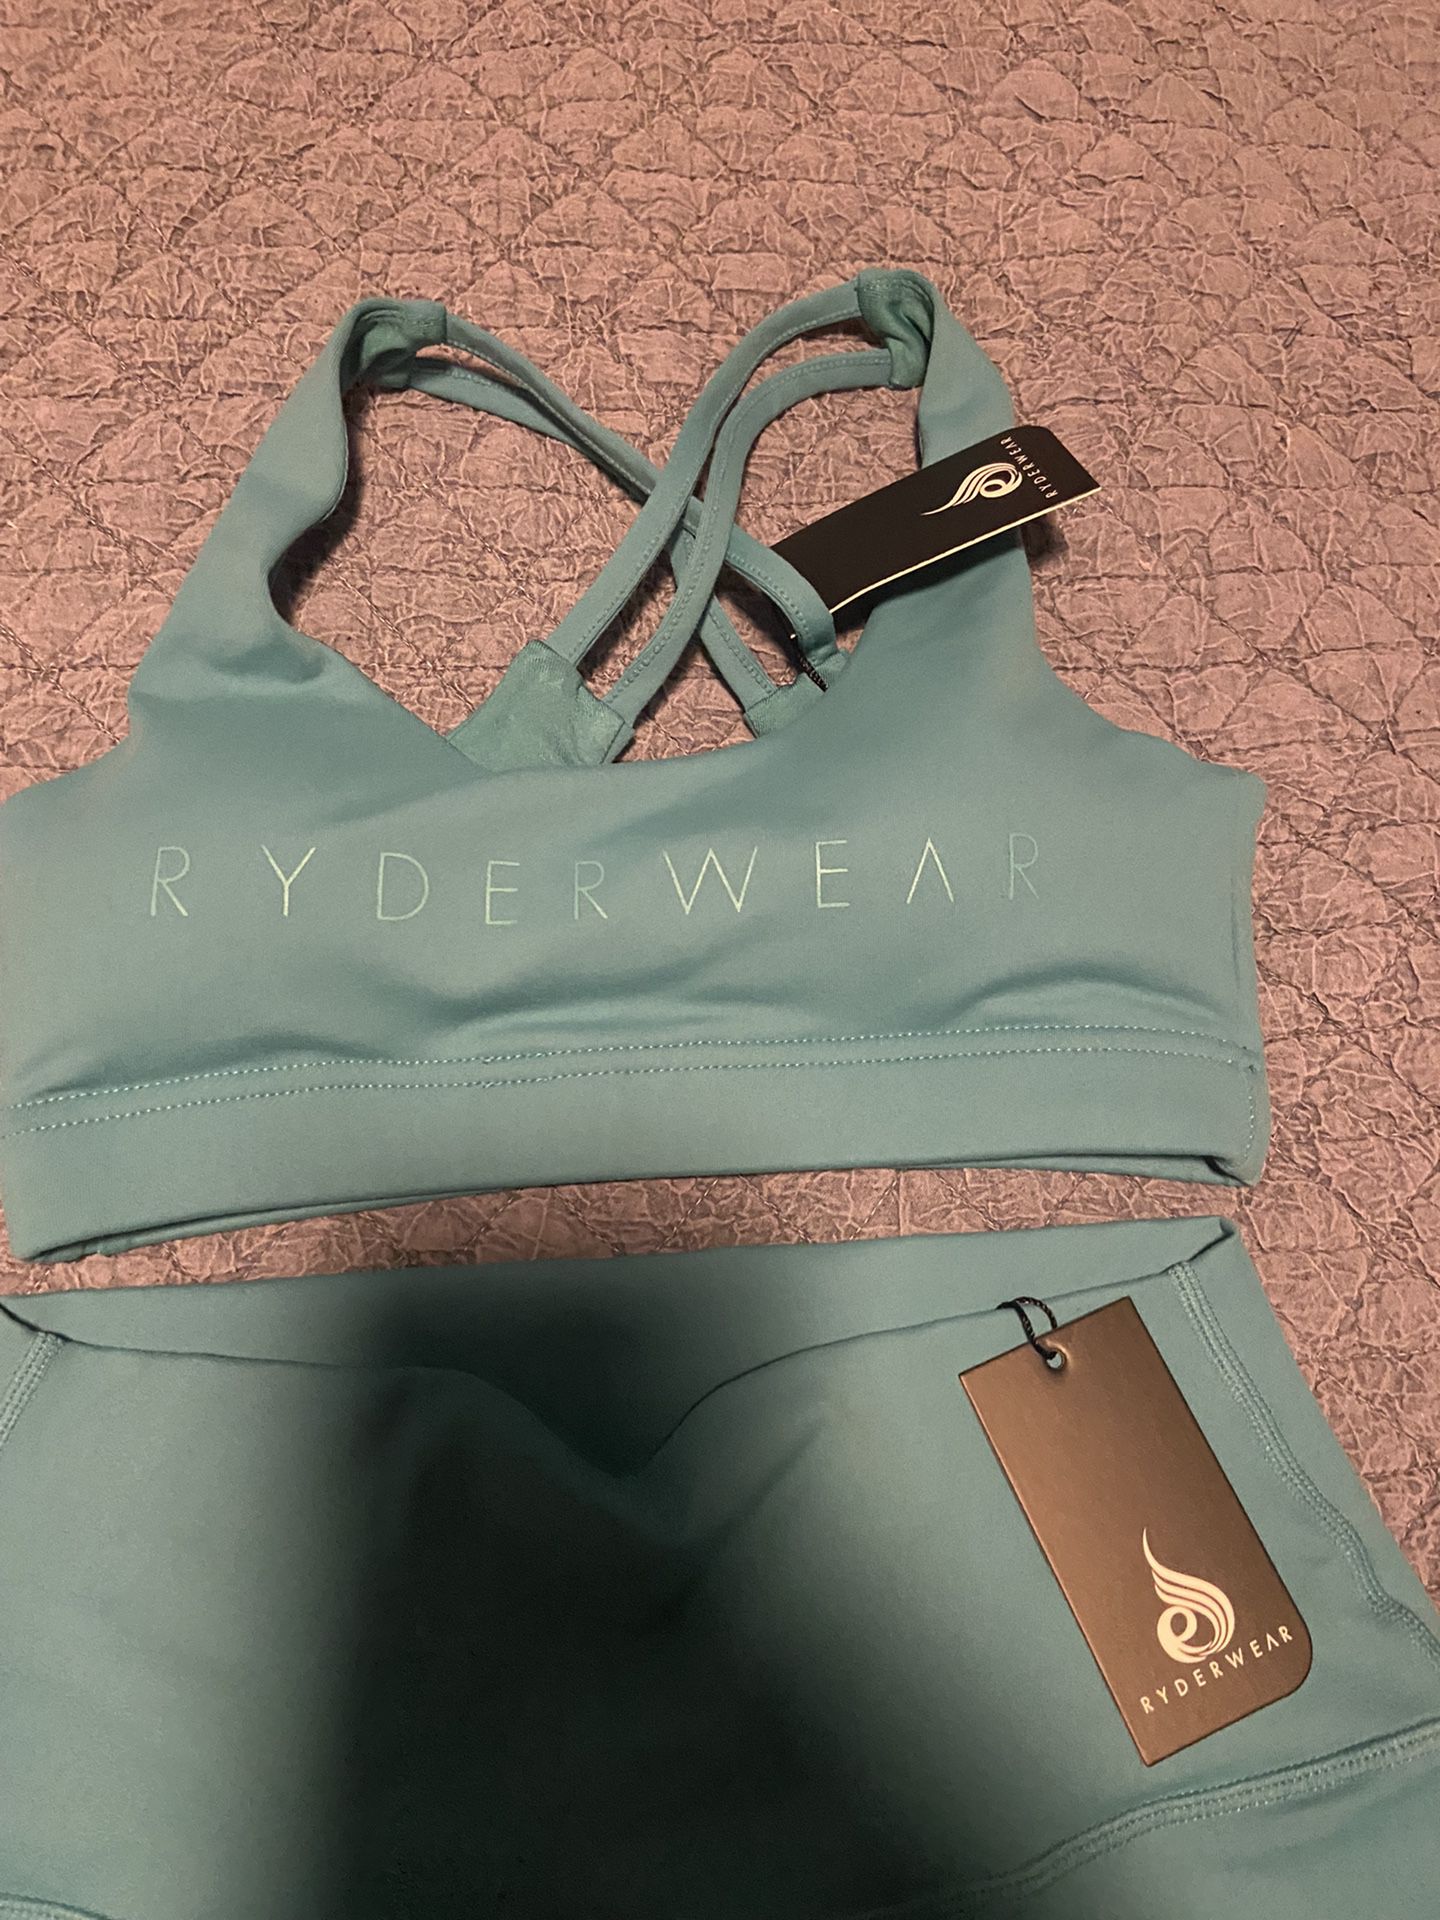 Ryderwear Woman’s Workout Gear. Brand New